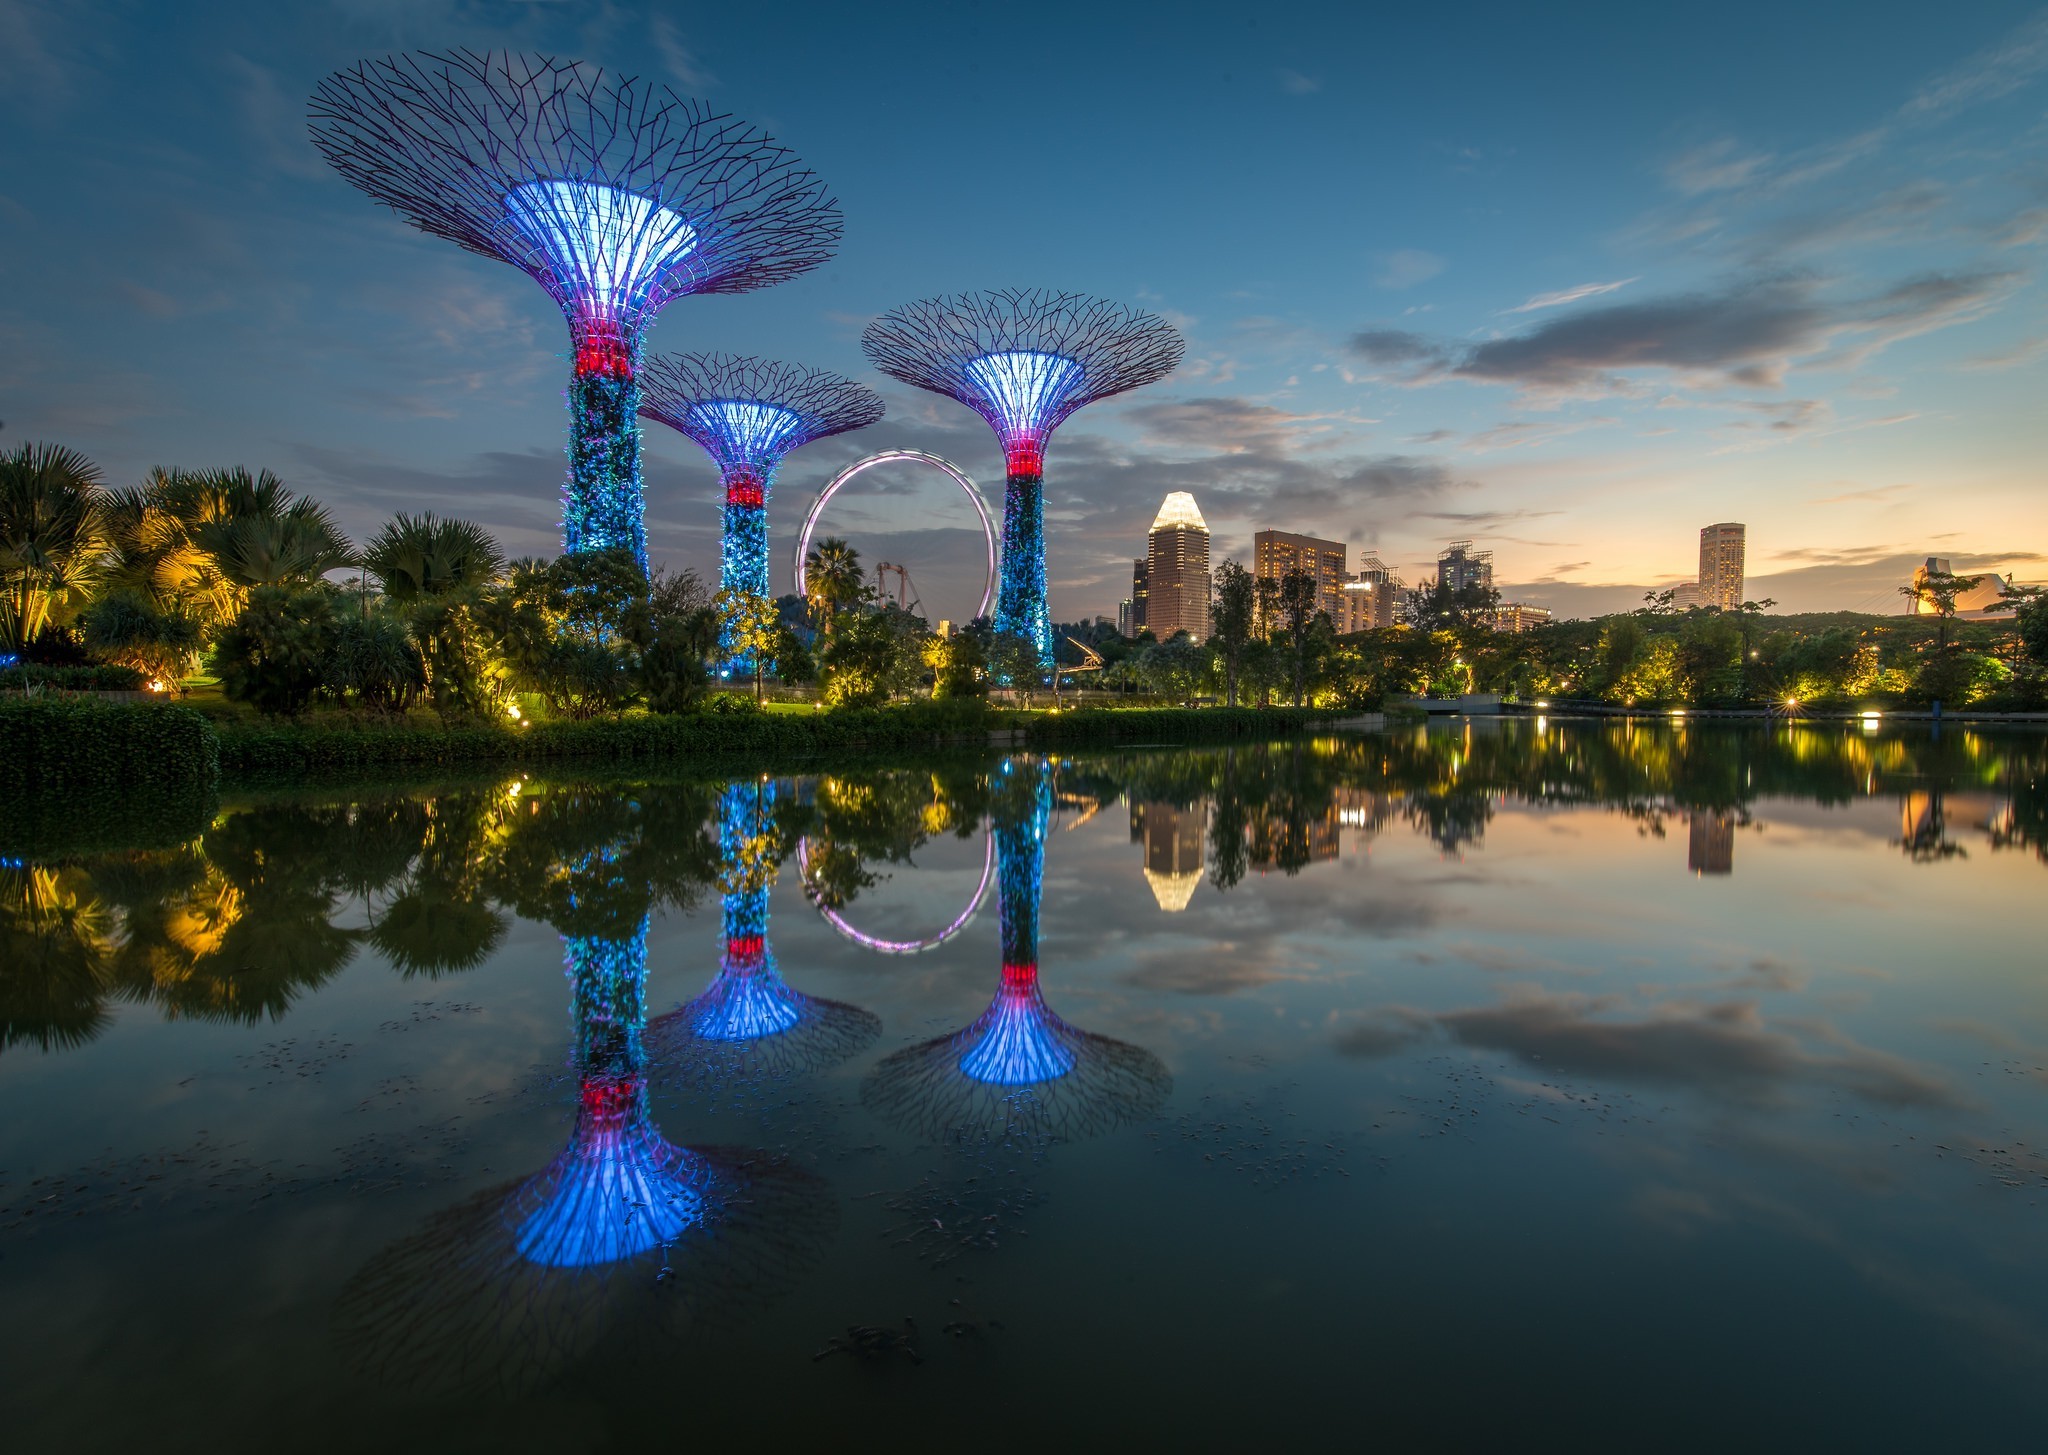 Singapore Nature City Night - 2048x1455 Wallpaper 